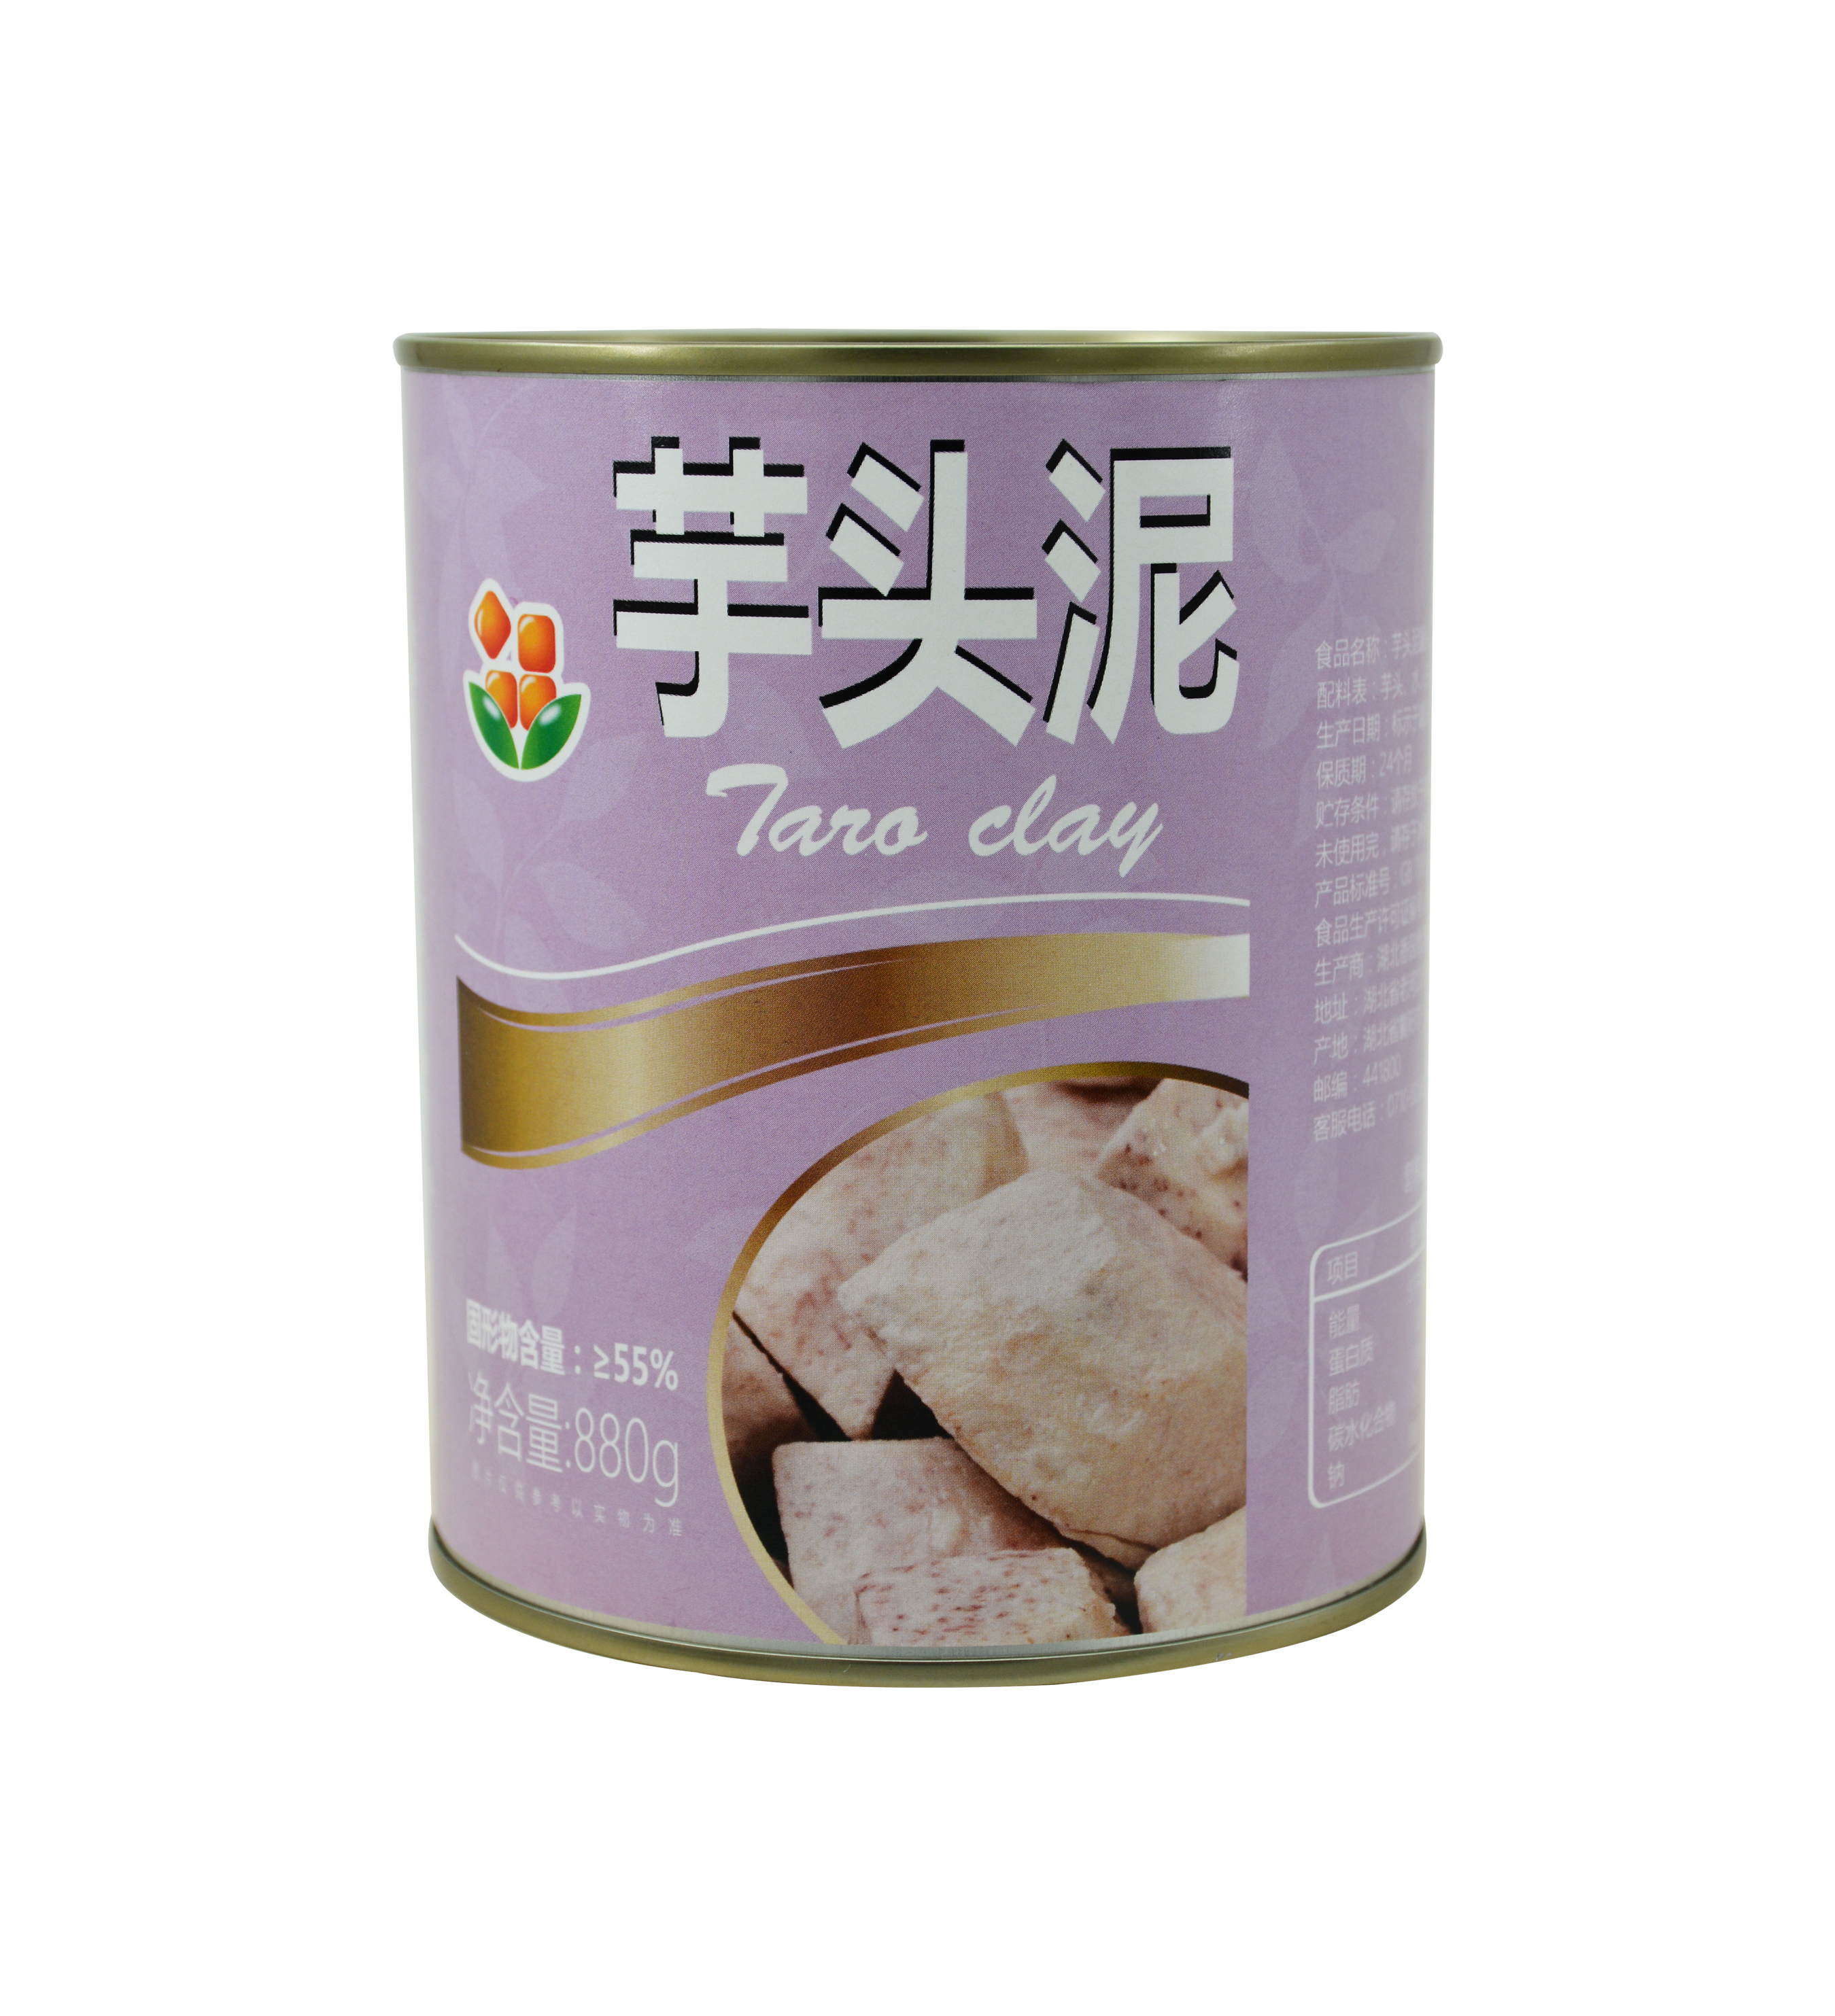 Canned taro clay